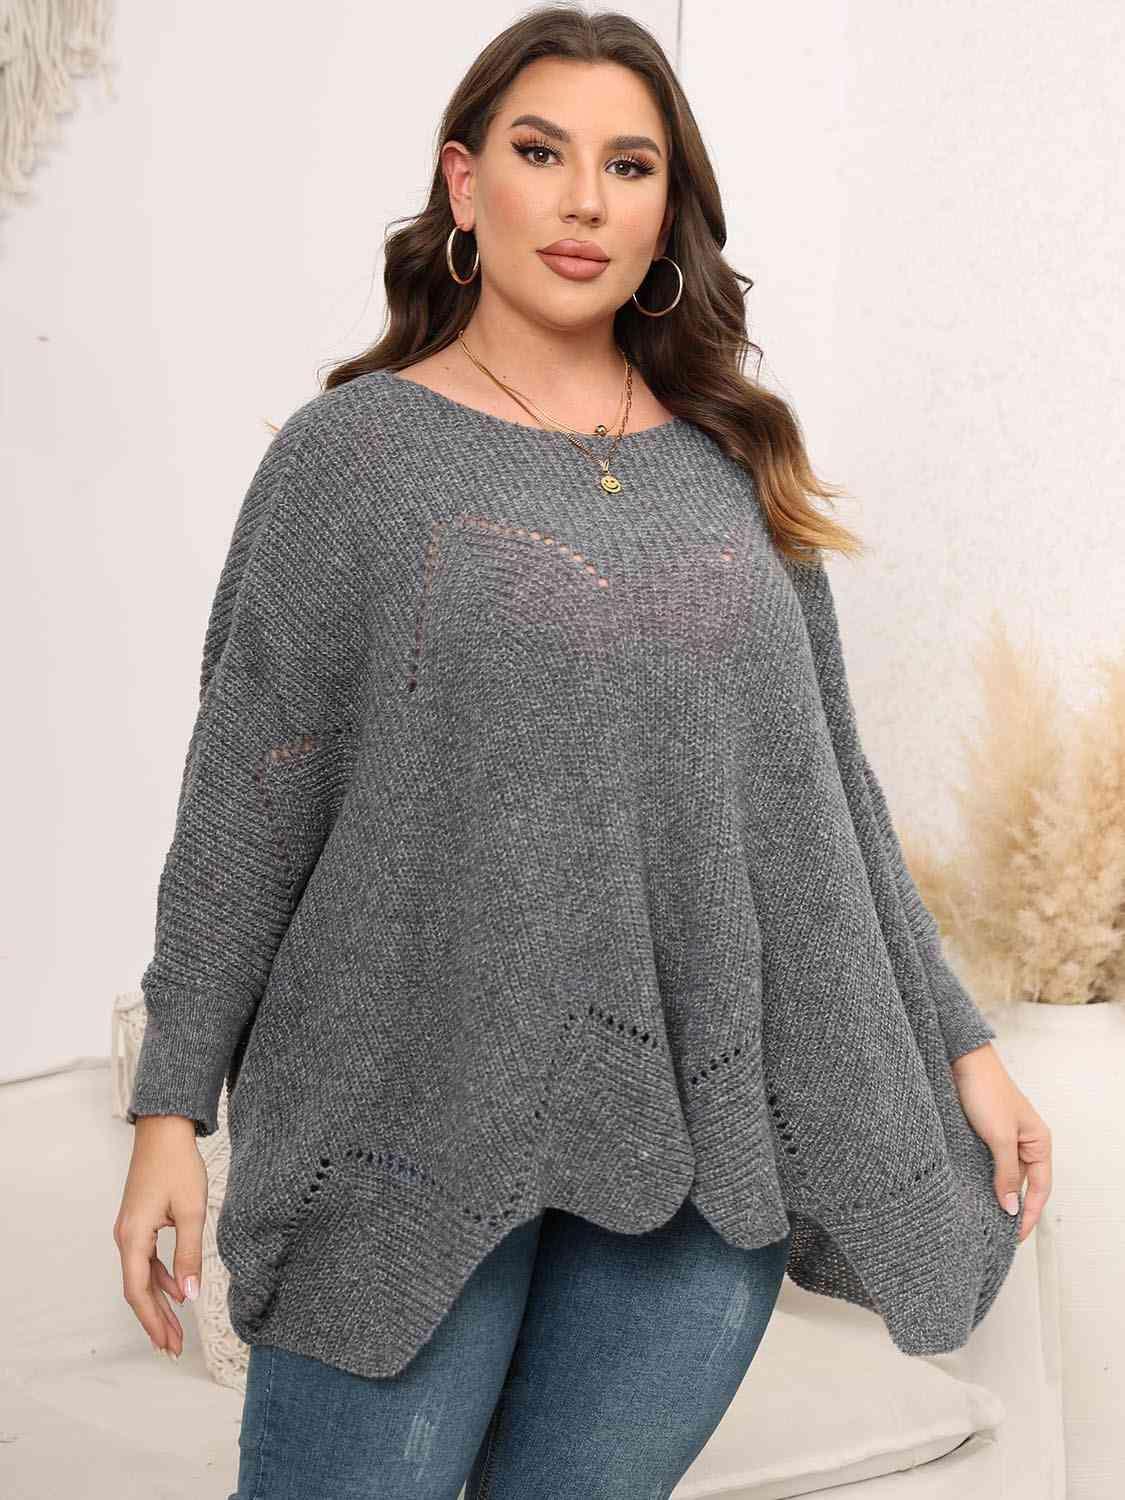 Flourishing Women's Plus Size Batwing Sweater - MXSTUDIO.COM